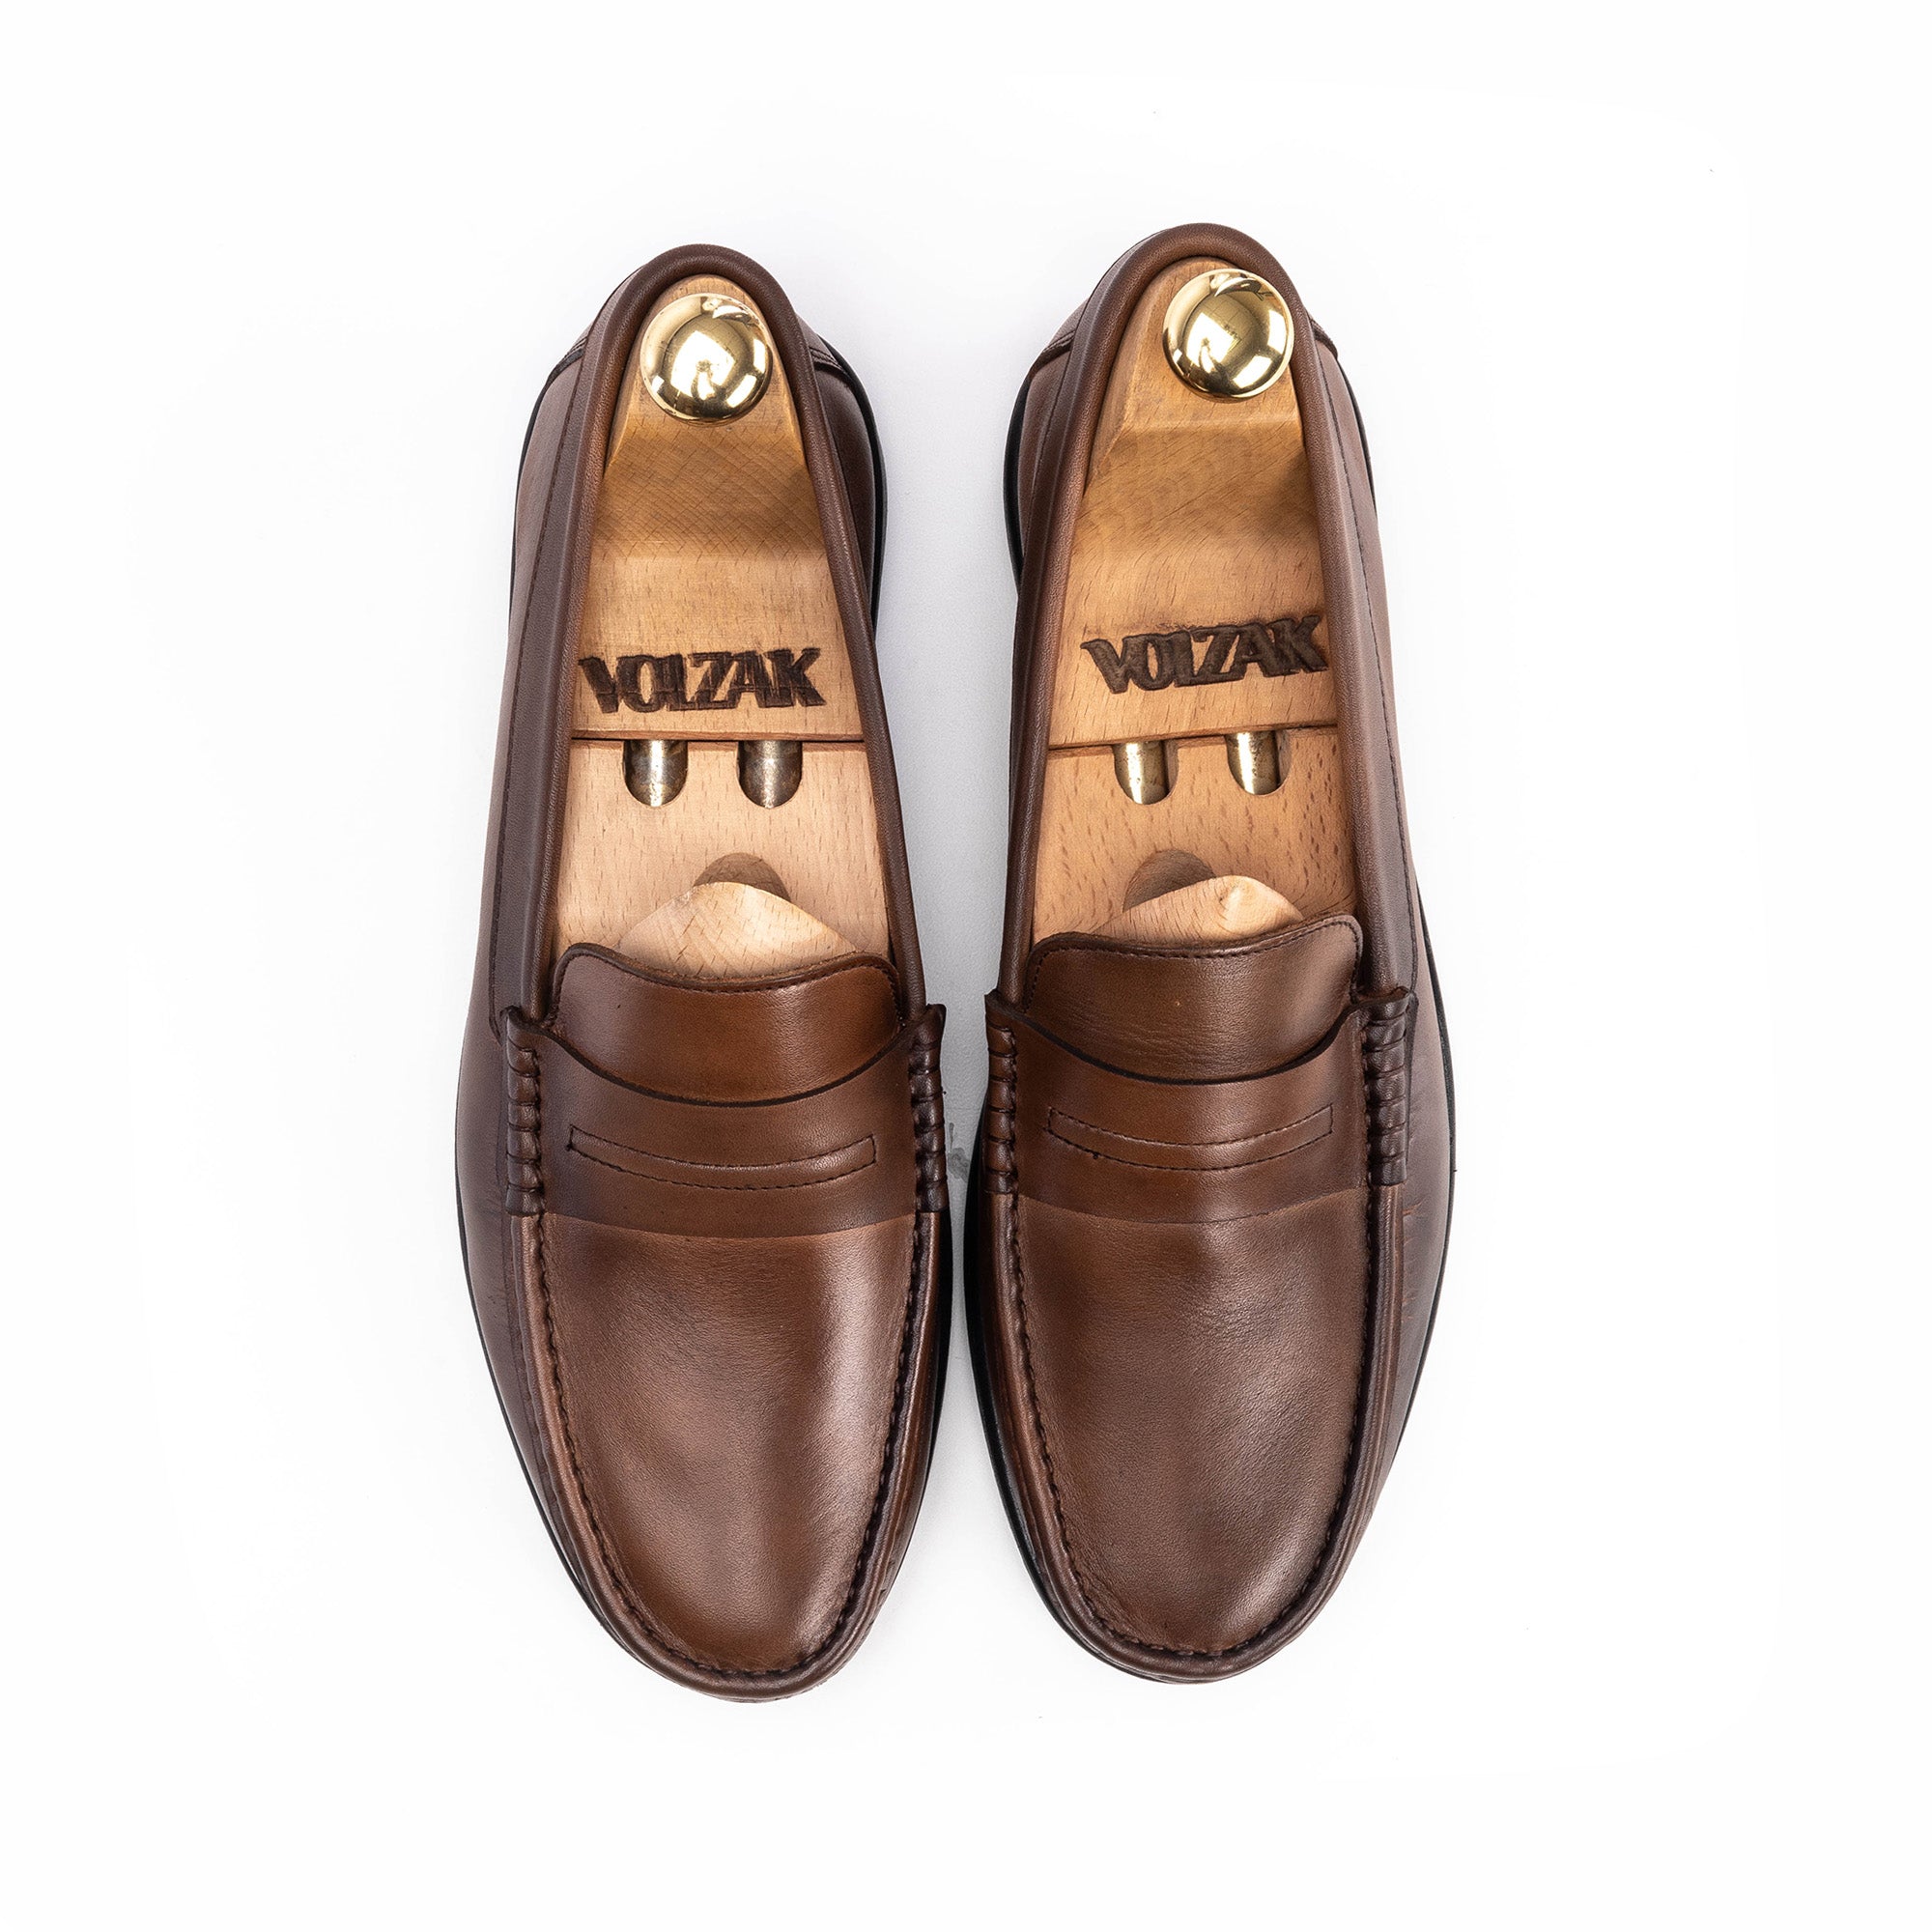 '''5212 Chaussure en cuir marron vintage